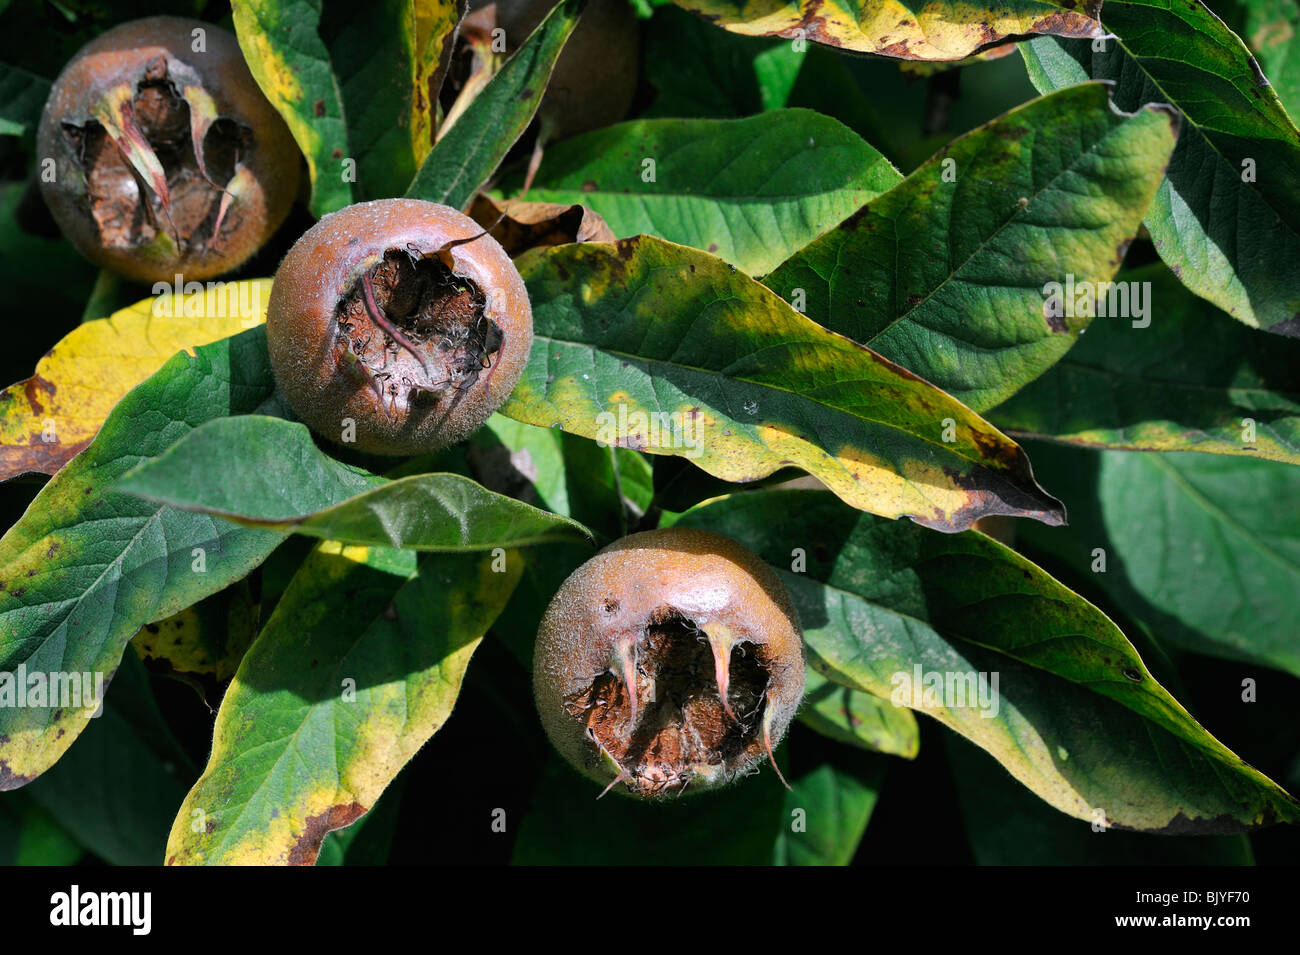 Common Medlar (Mespilus germanica) showing fruit / pomes Stock Photo